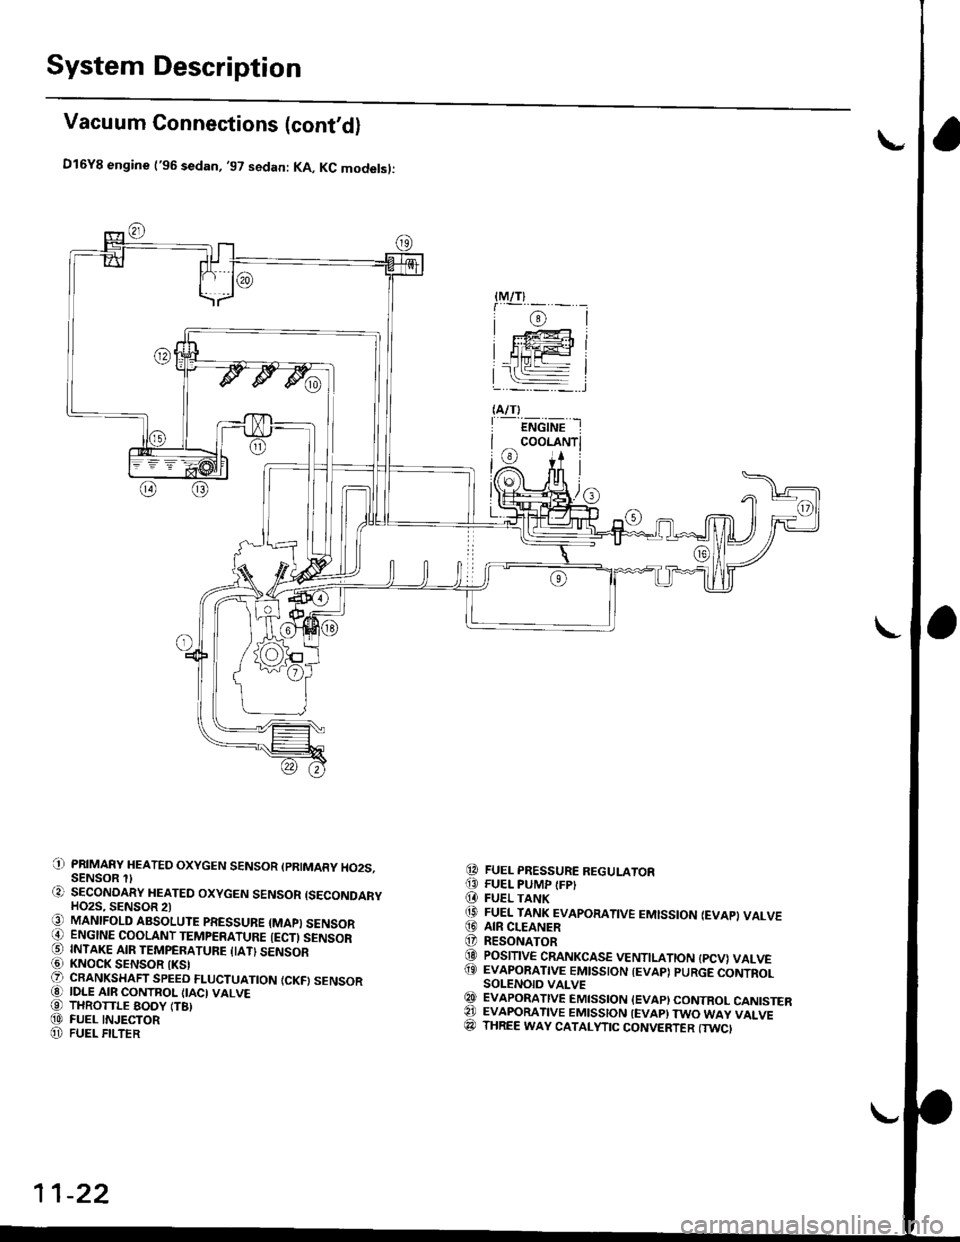 HONDA CIVIC 1997 6.G User Guide System Description
Vacuum Connections (contd)
D16Y8 engine (96 sedan, 97 sedan: KA, KC modelsl:
PRIMARY HEATED OXYGEN SENSOR (PRIMARY HO2S.SENSOR  SECONOARY HEATED OXYGEN SENSOR {SECONDARYHO2S, SEN